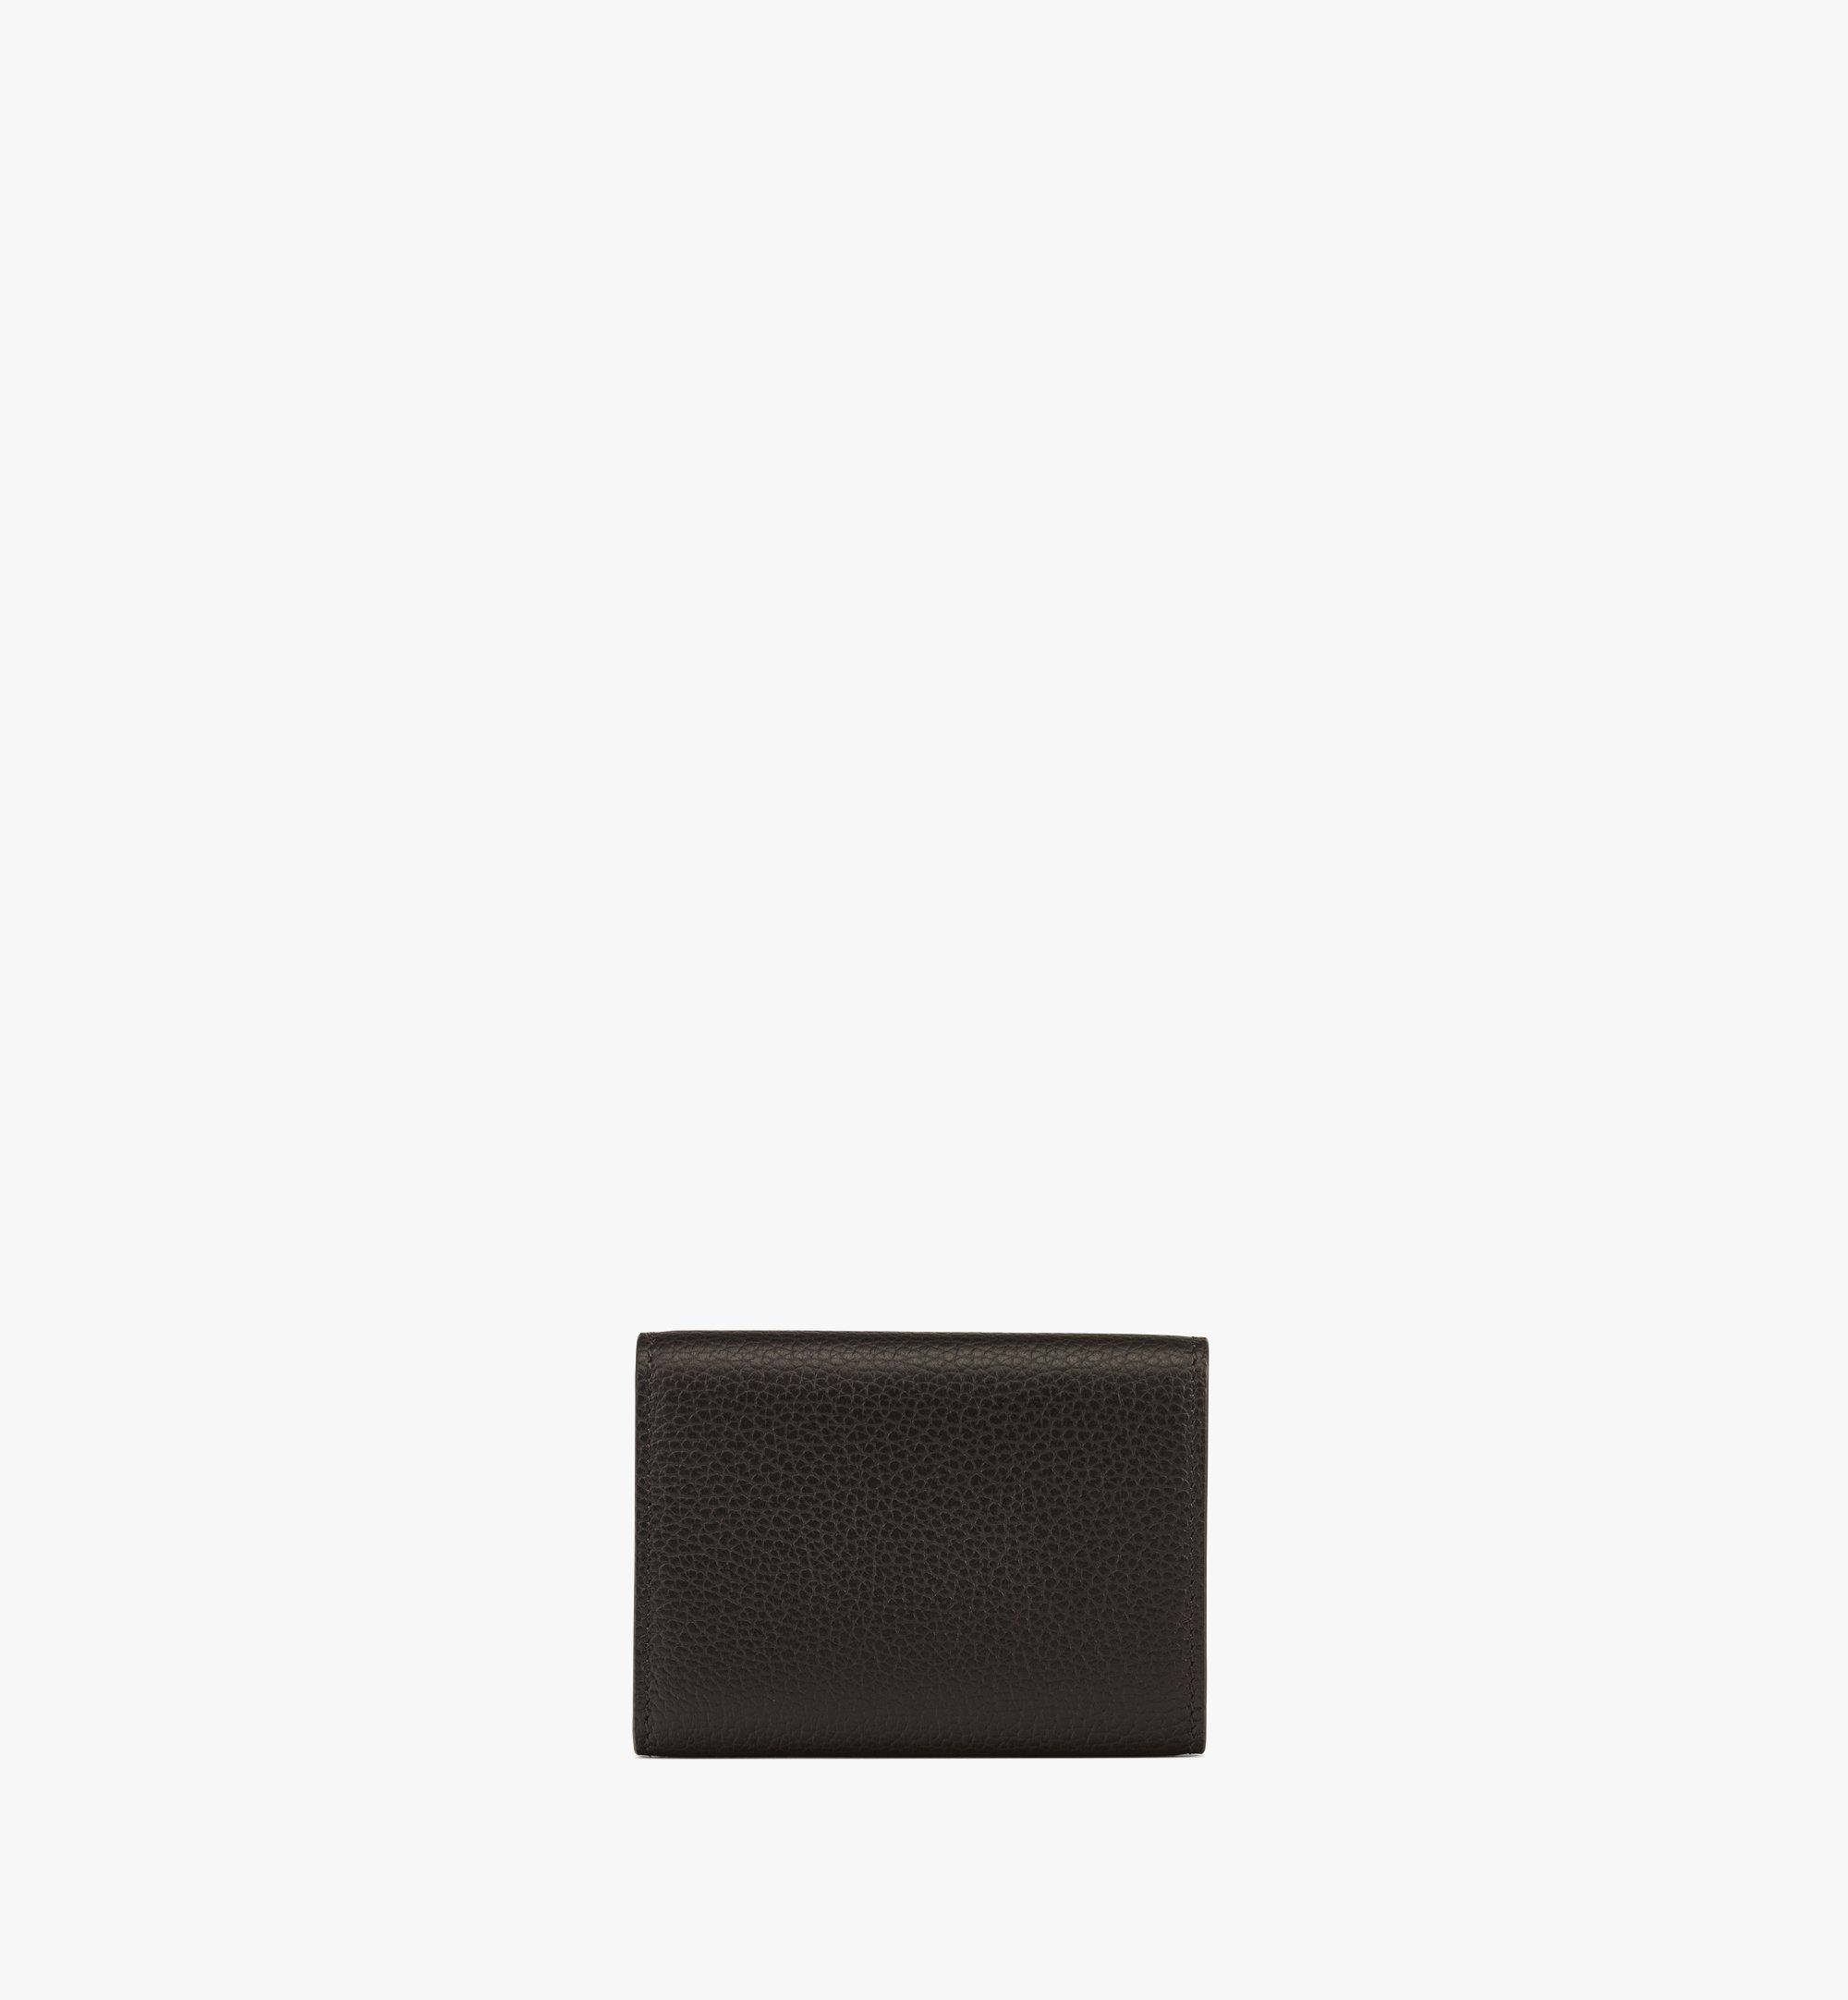 MCM MCM Tech Trifold Wallet in Embossed Spanish Leather Black MXSCATC02BK001 Alternate View 2